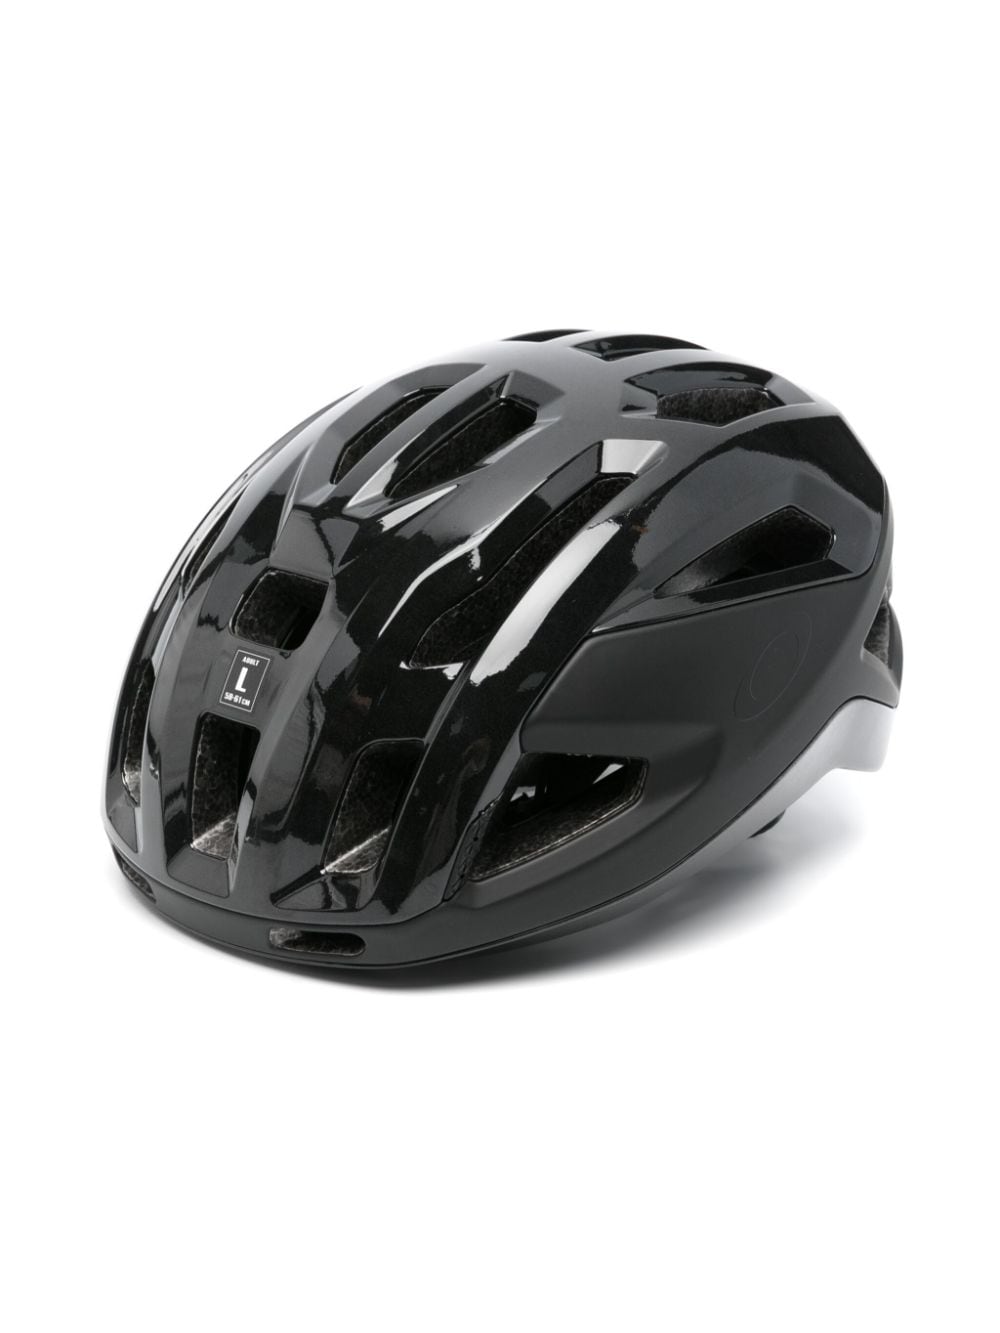 Aro3 Endurance helmet<BR/><BR/><BR/>